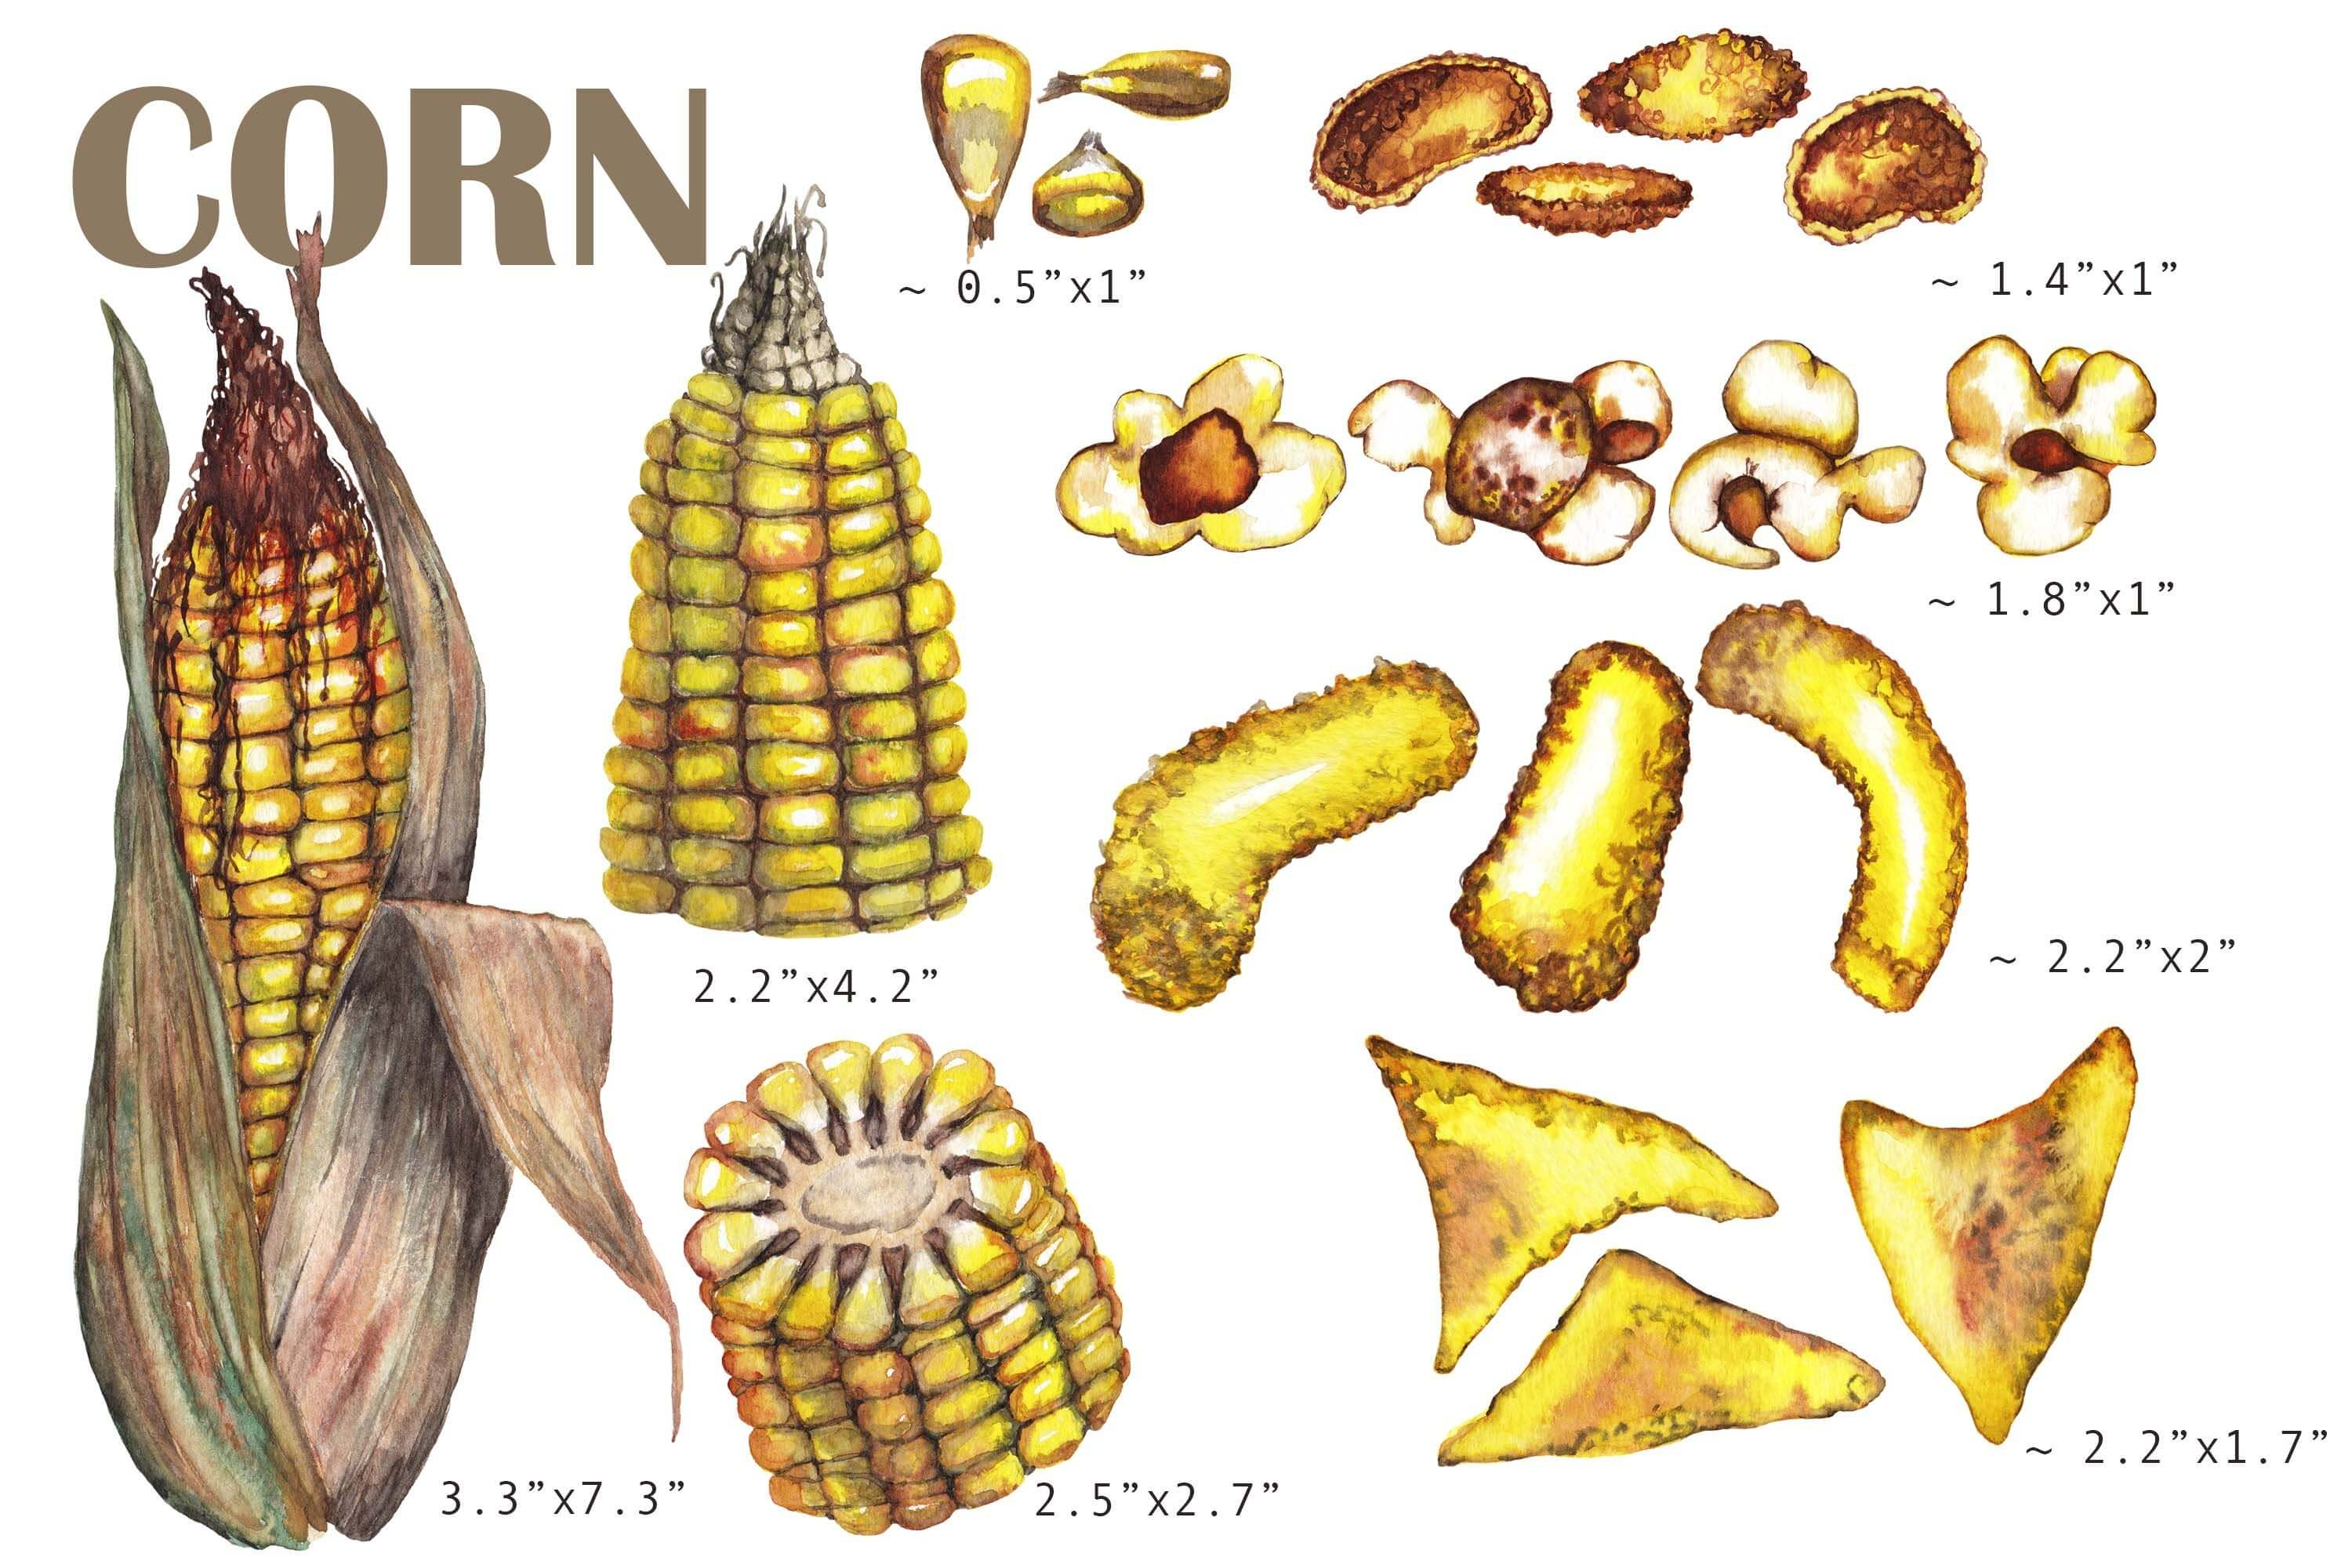 Corn start, corn chips, popcorn and popcorn lettering.